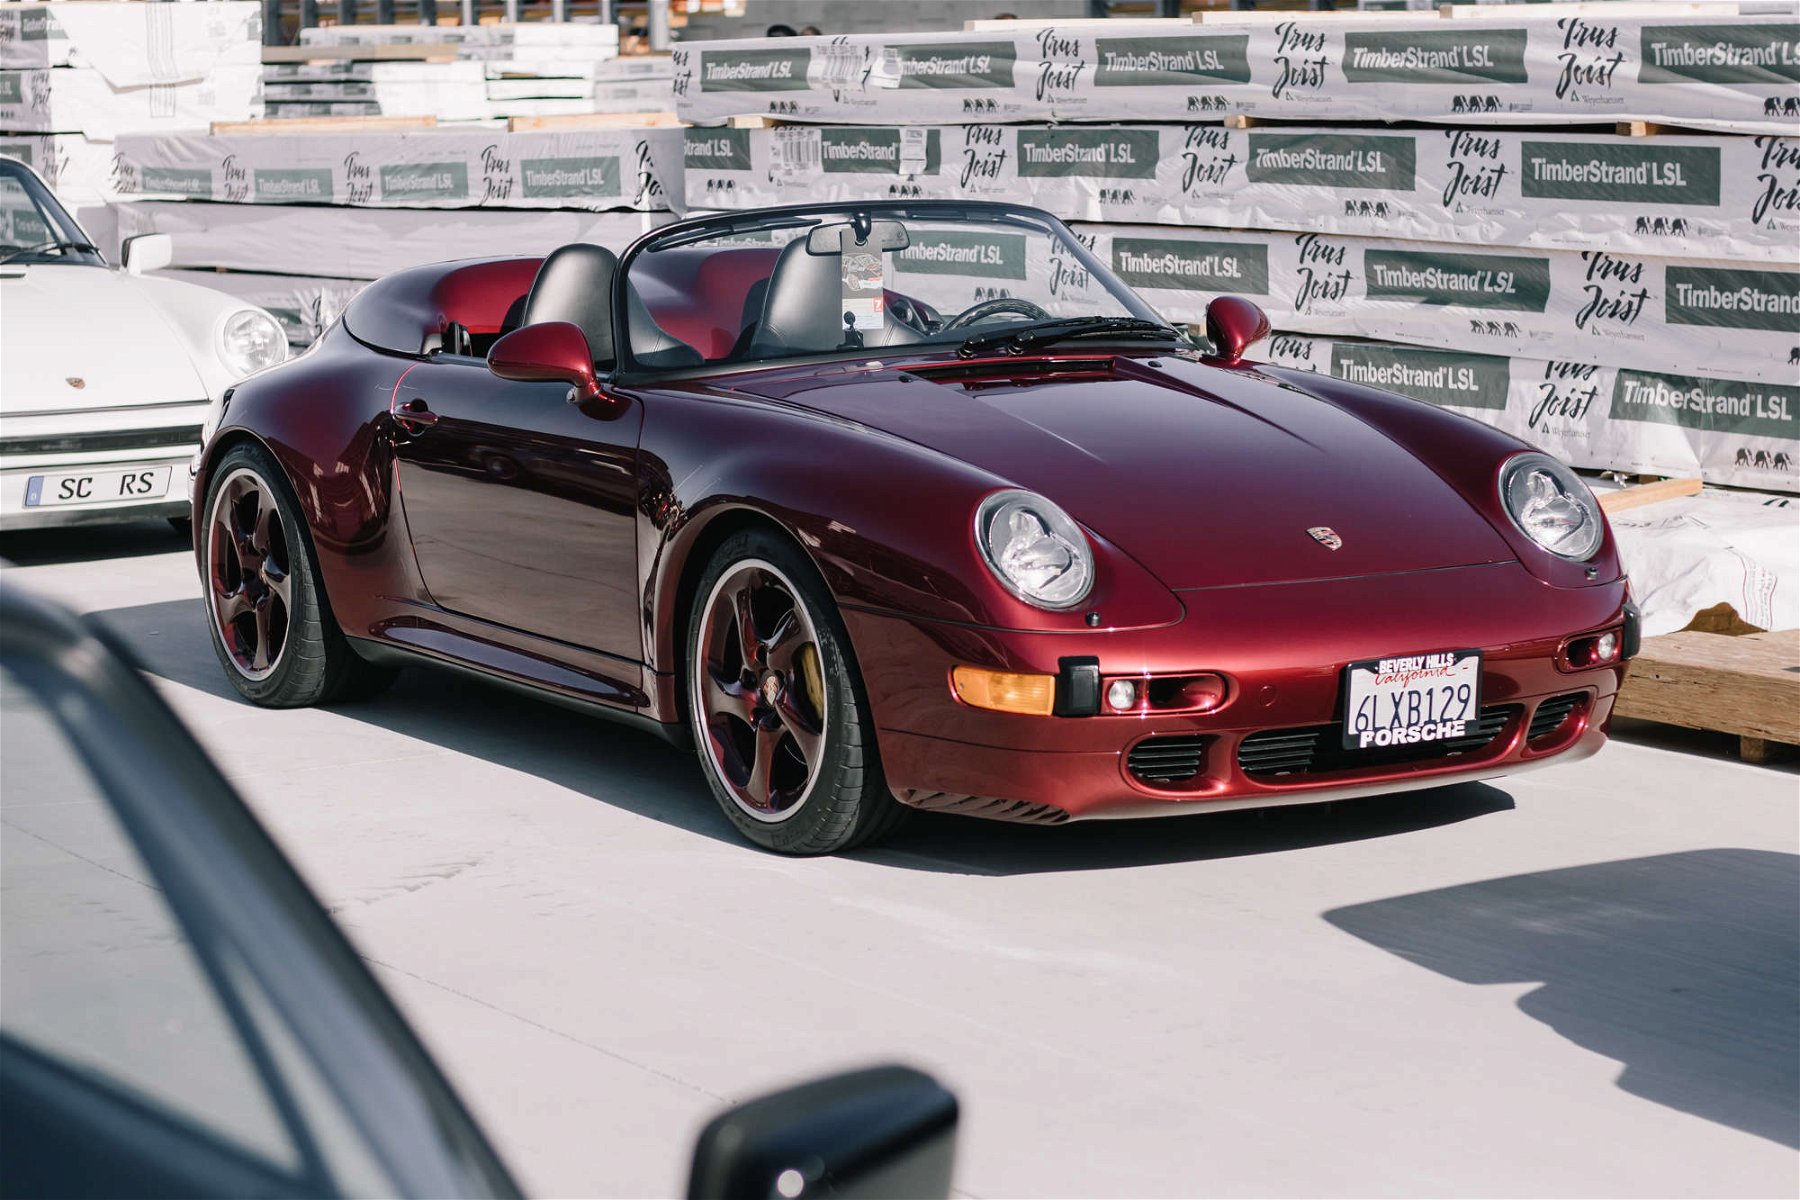 Is there a cooler Porsche event than “Luftgekühlt” in California?